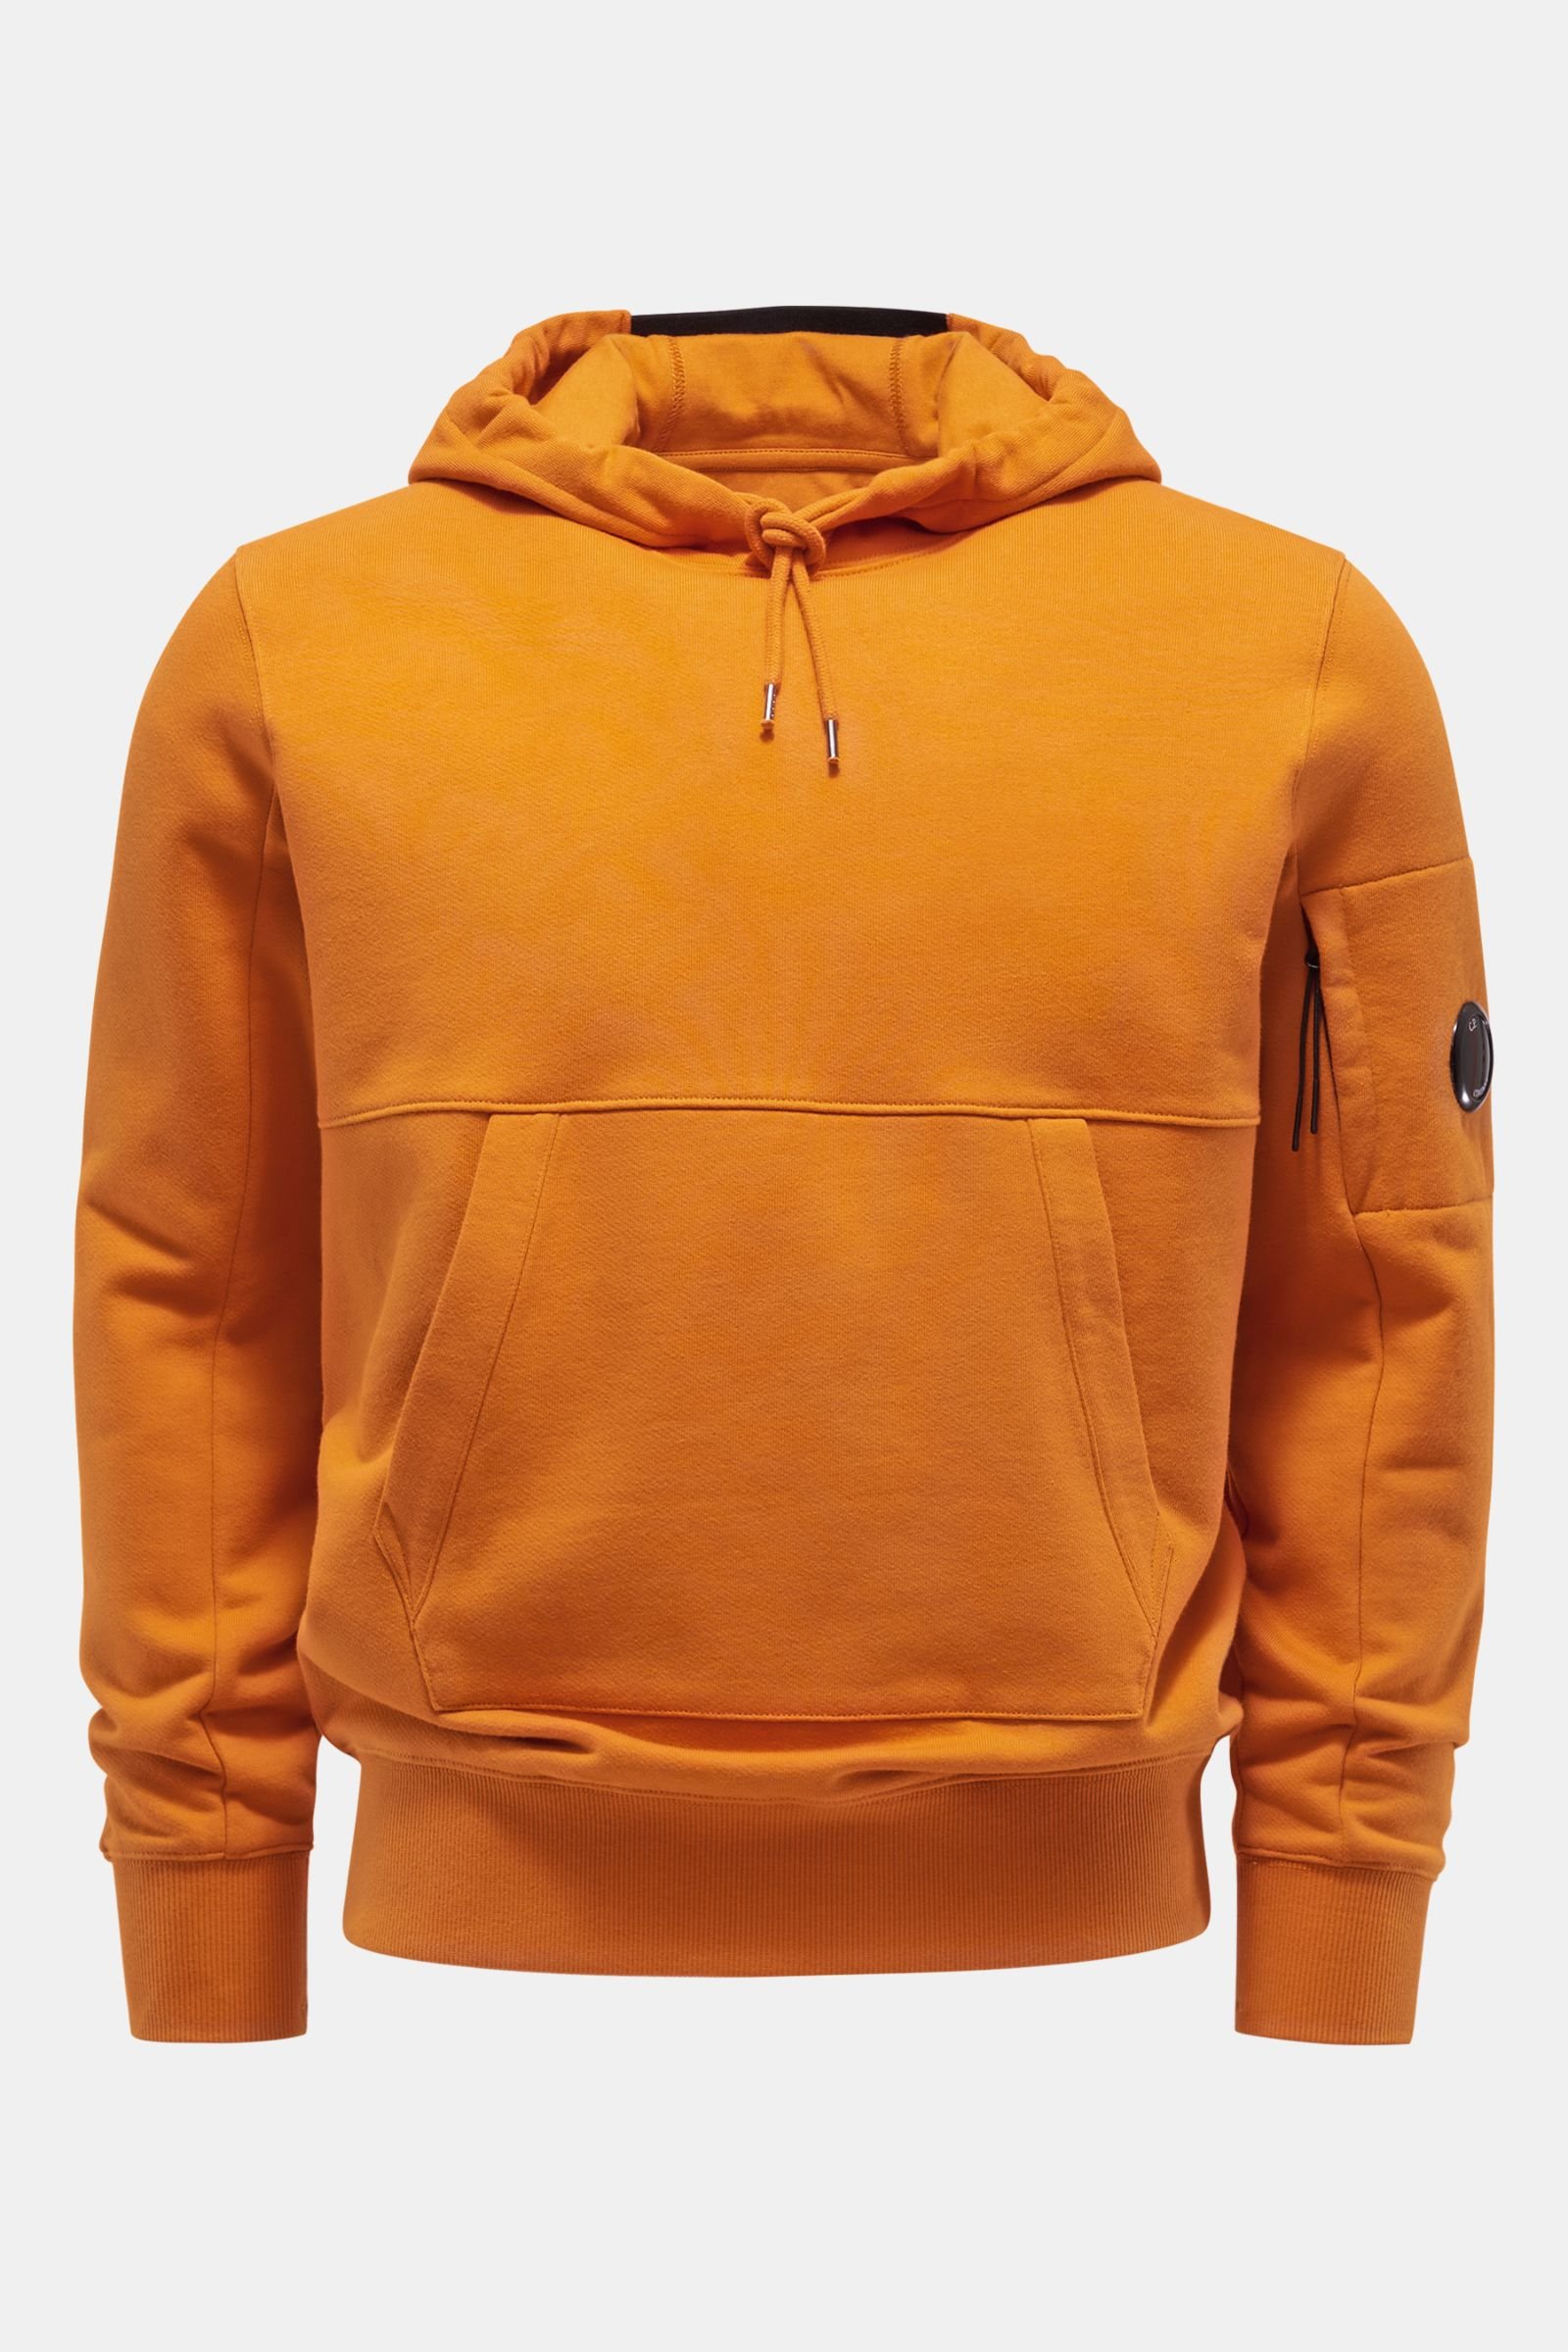 Hooded jumper orange